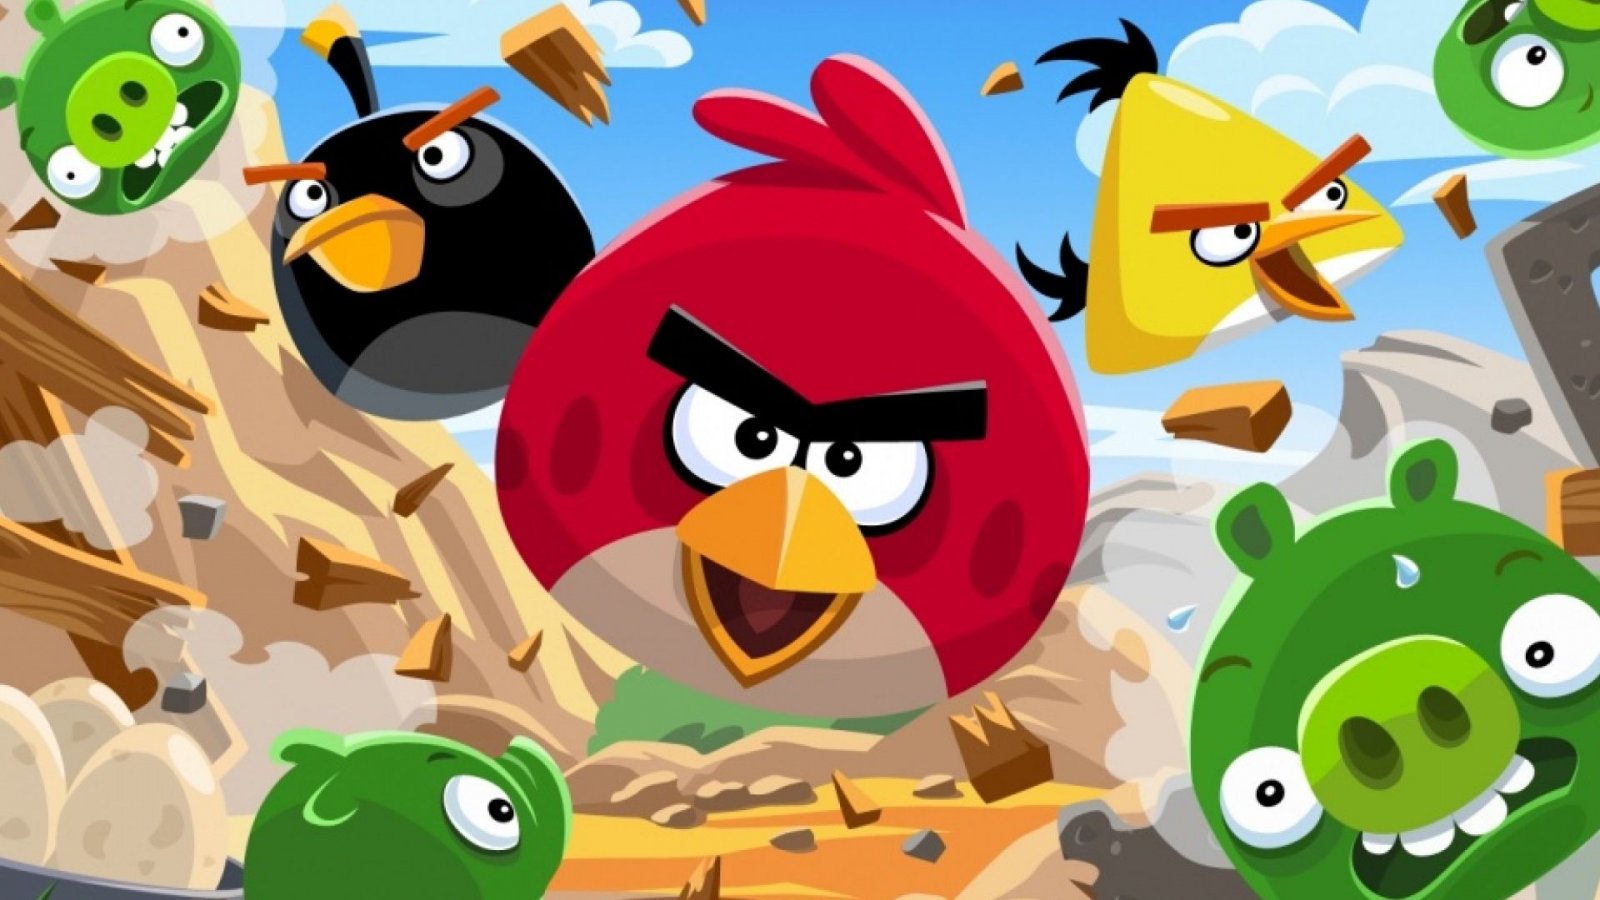 Angry Birds verrà rimosso da Google Play e rinominato su App Store fra due giorni